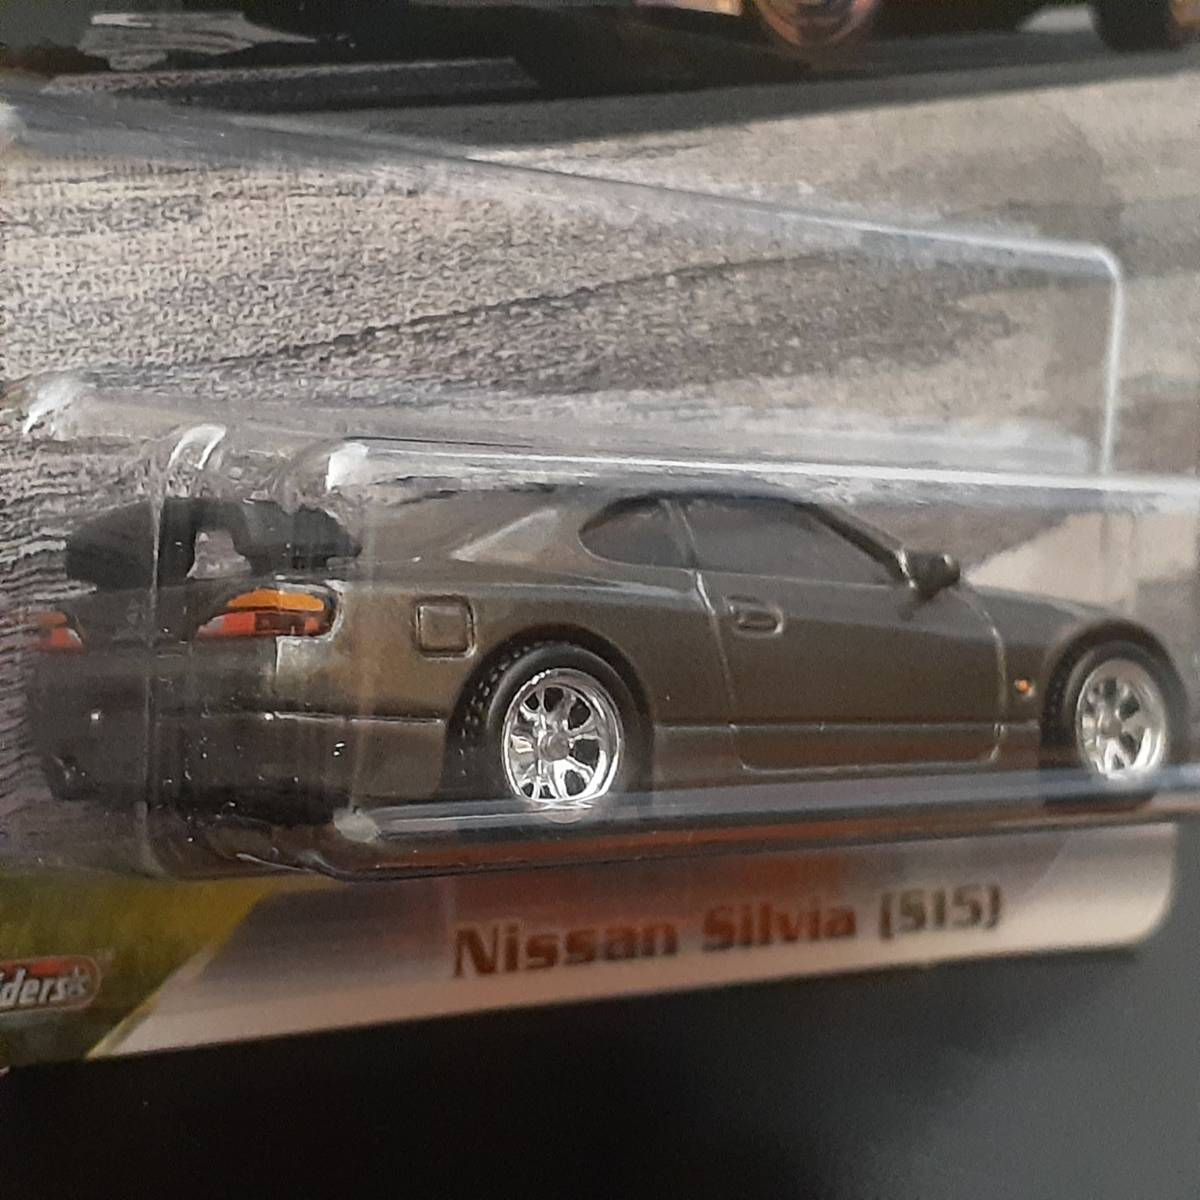  Hot Wheels NISSAN SILVIA S15 стальной The Fast and The Furious Silvia миникар FAST&FURIOUS × HOT WHeeLs сотрудничество wa стул pi